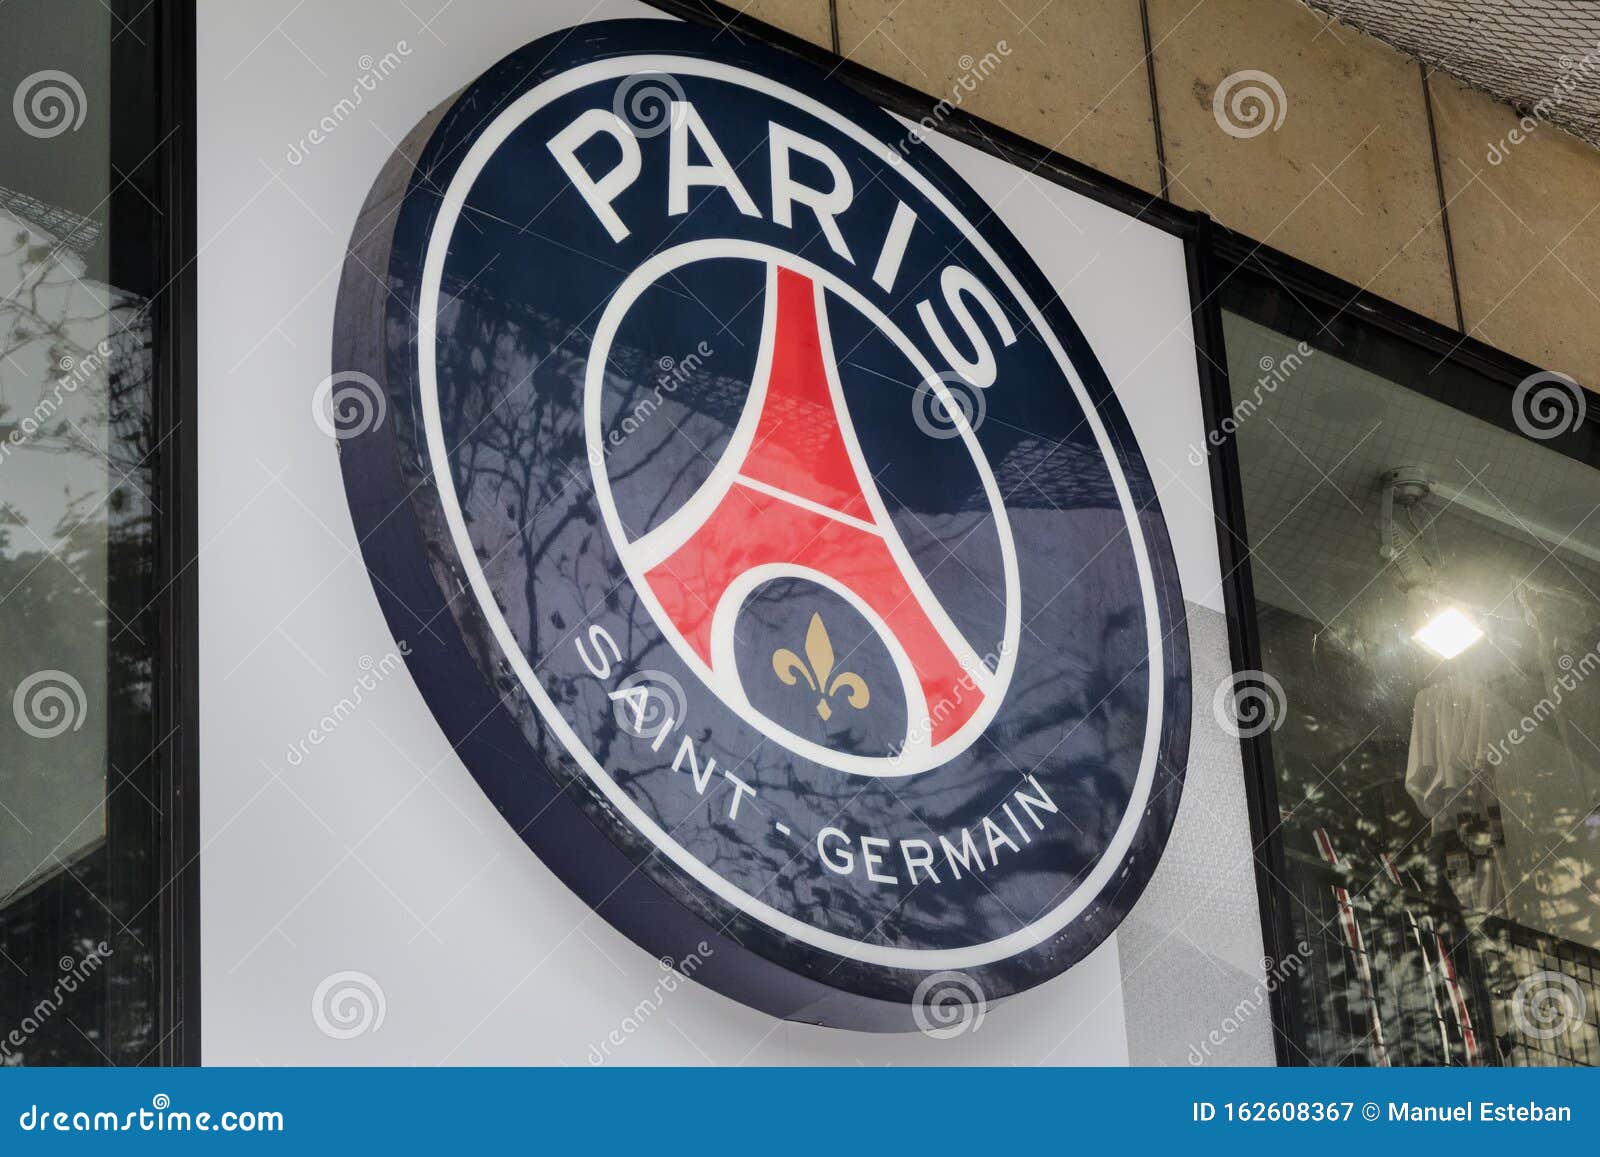 Paris Saint-Germain Logo on Saint-Germain Football Store Editorial Photography - Image of symbol, expensive: 162608367